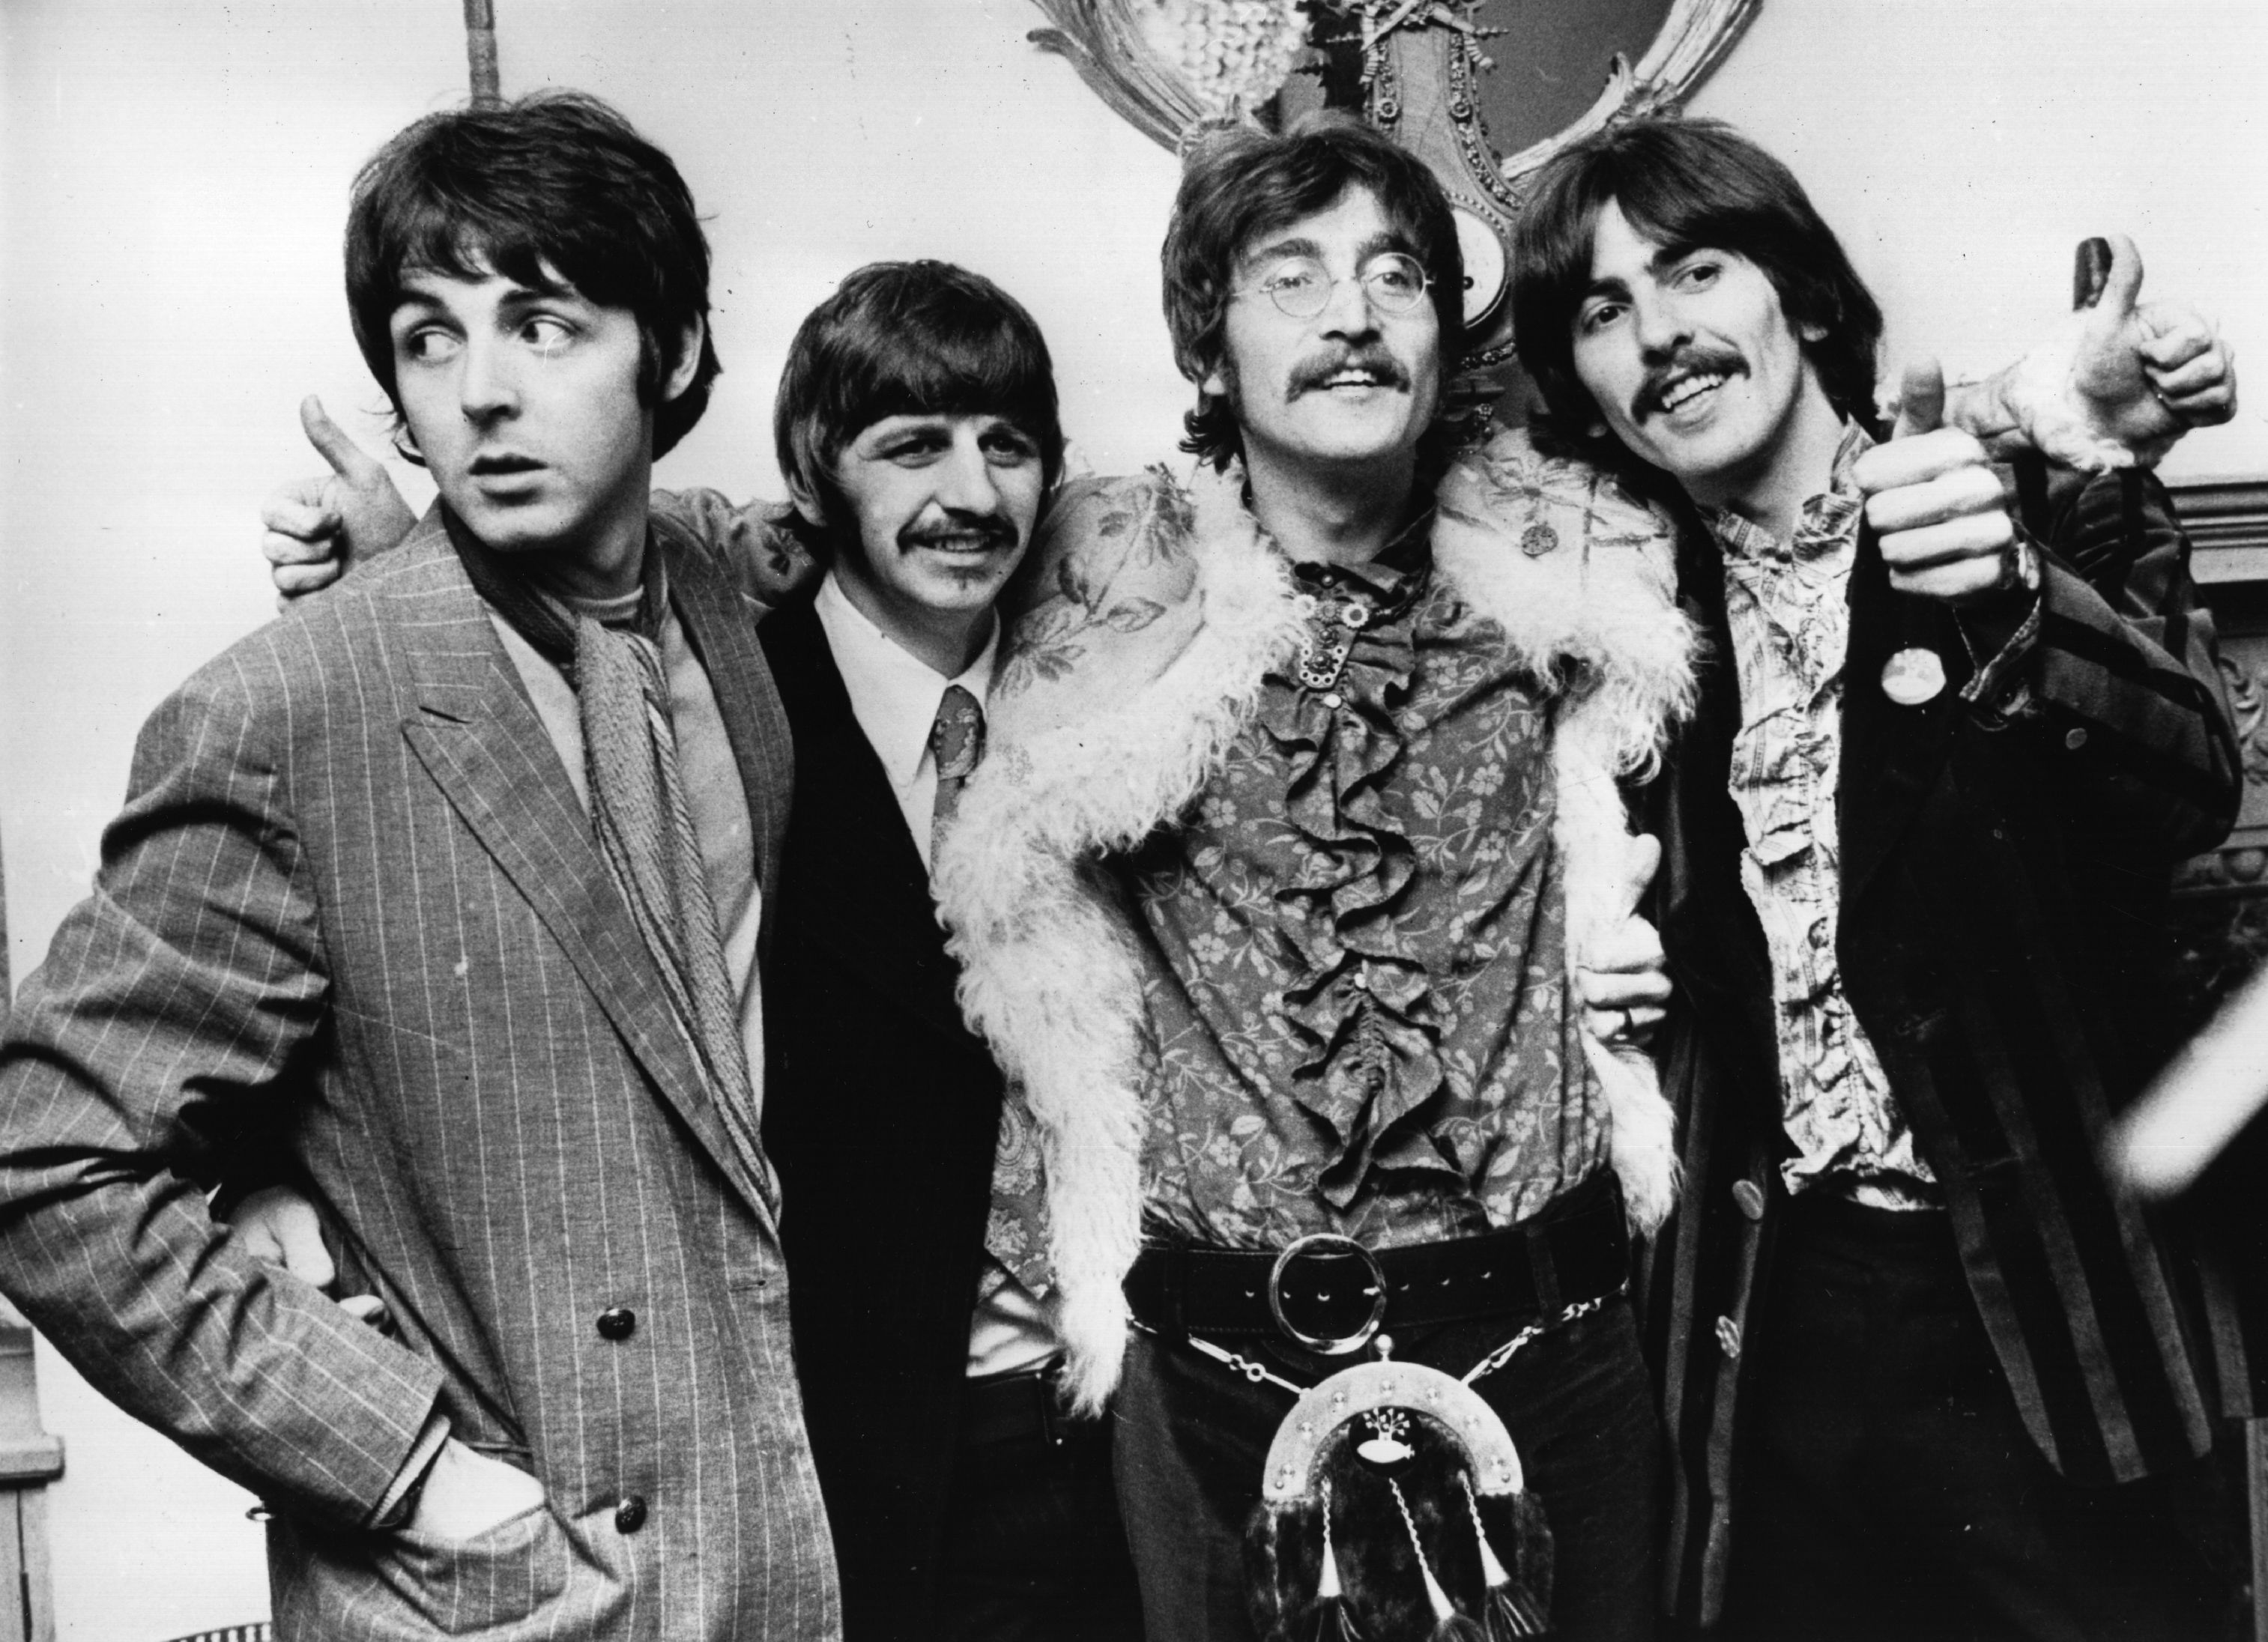 Paul McCartney, Ringo Starr, John Lennon, and George Harrison standing during The Beatles' 'Magical Mystery Tour' era